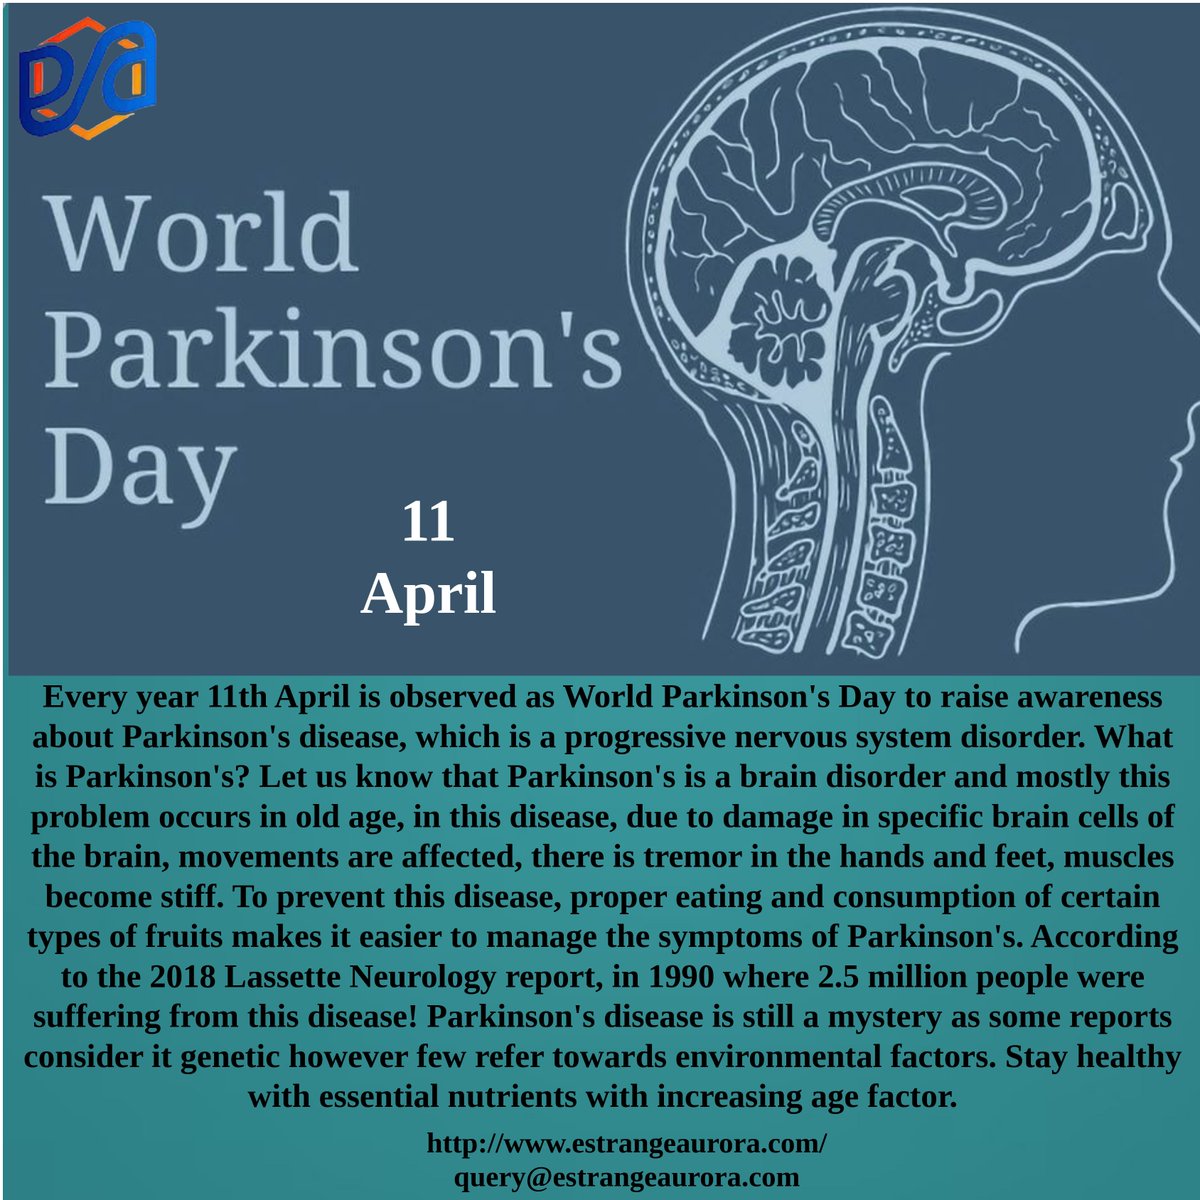 Wishing Everyone a World Parkinson's Day from Estrange Aurora.
#parkinsons #parkinsonsdisease #parkinsonsawareness #parkinson #stroke #parkinsonsexercise #rehabilitation #boxing #parkinsonswarrior #alzheimers #parkinsonsfitness #dementia #neurorehab #braininjury #EstrangeAurora